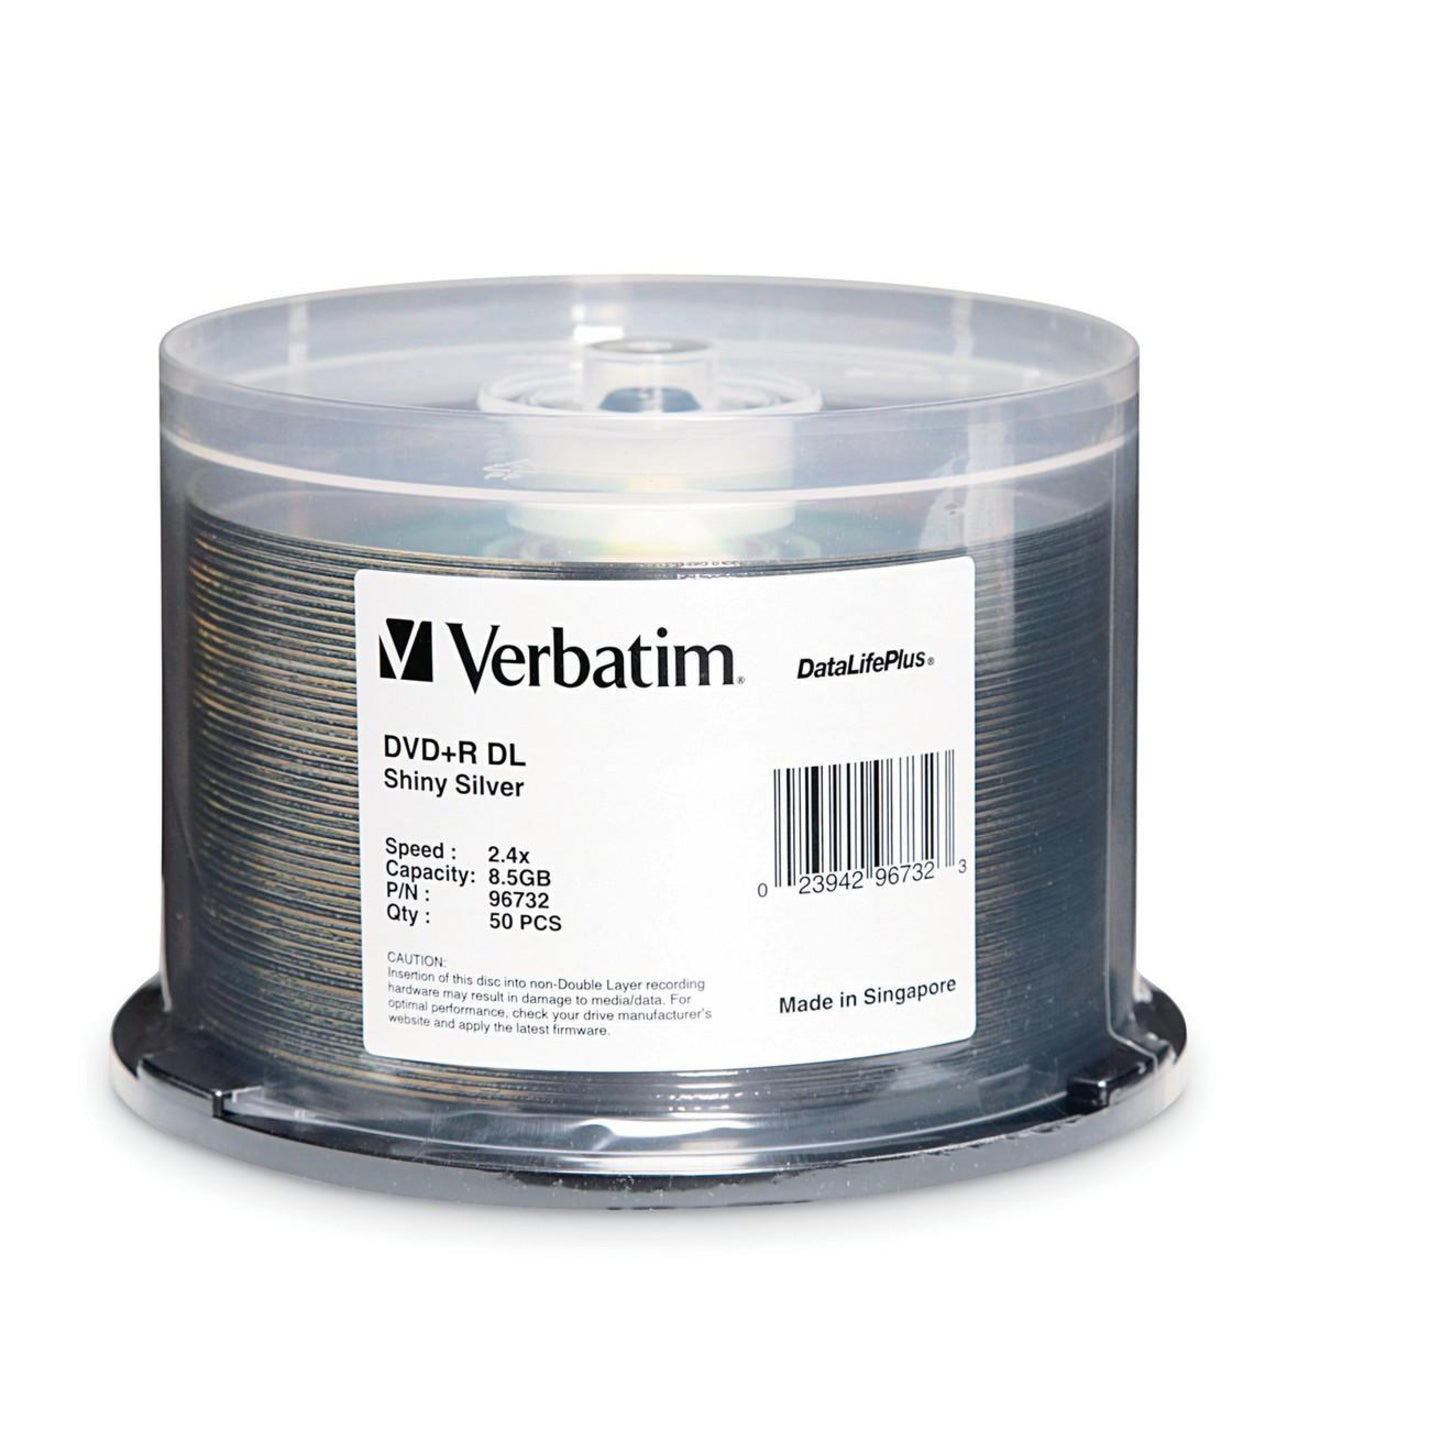 Verbatim 96732 Double Layer DVD+R DL 8.5GB 2.4x DataLifePlus Shiny Silver 50pk Spindle, Lifetime Warranty